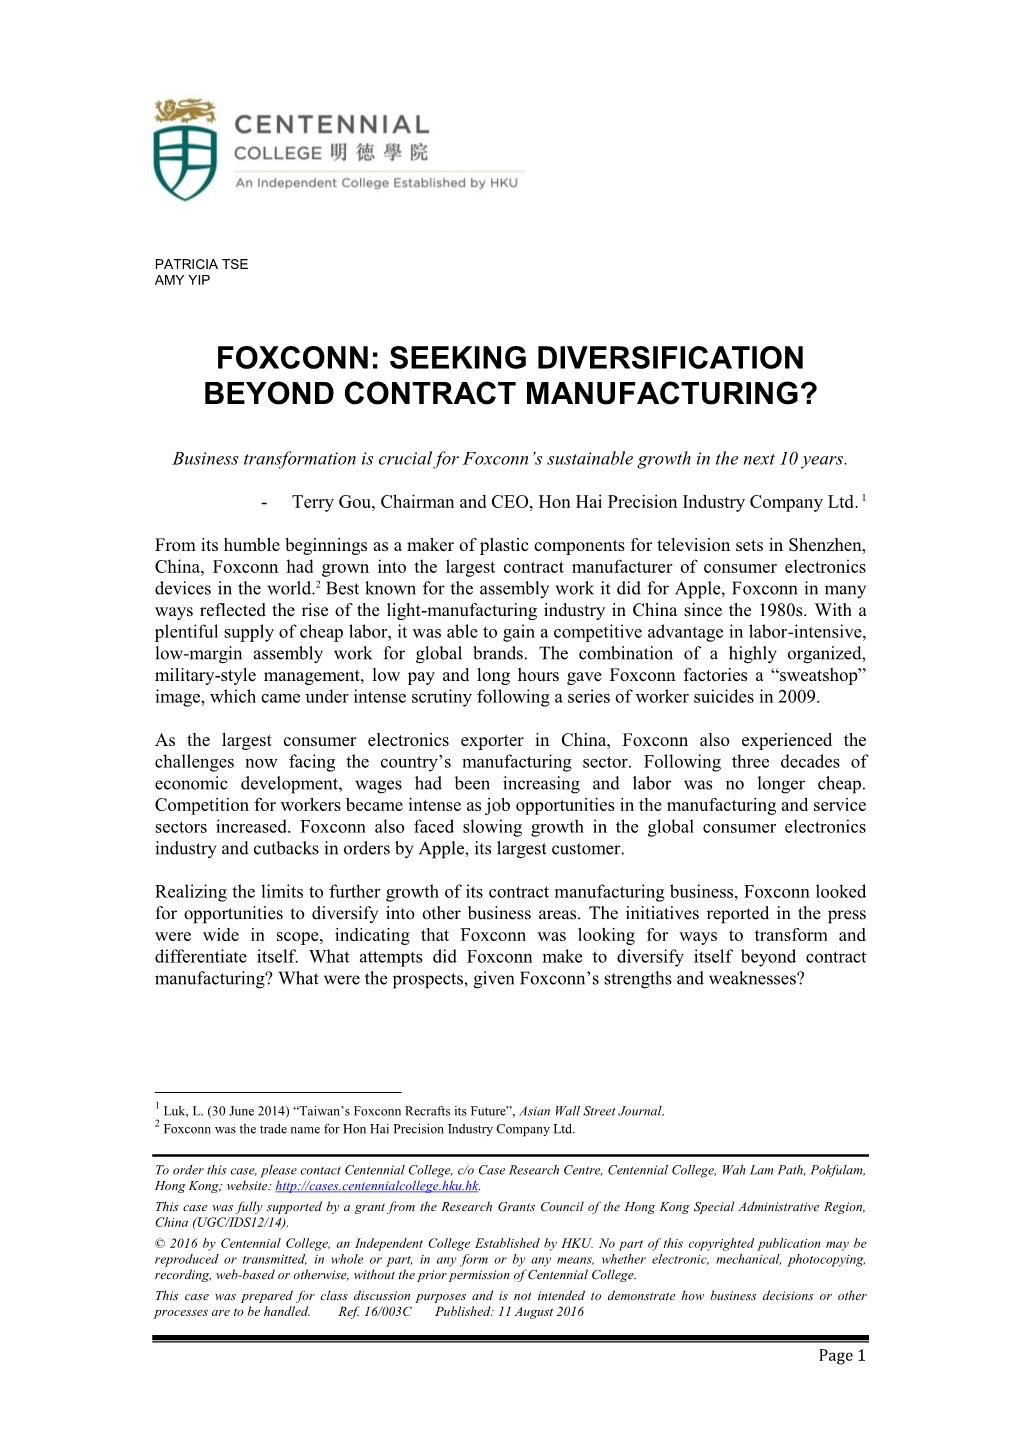 Foxconn: Seeking Diversification Beyond Contract Manufacturing?